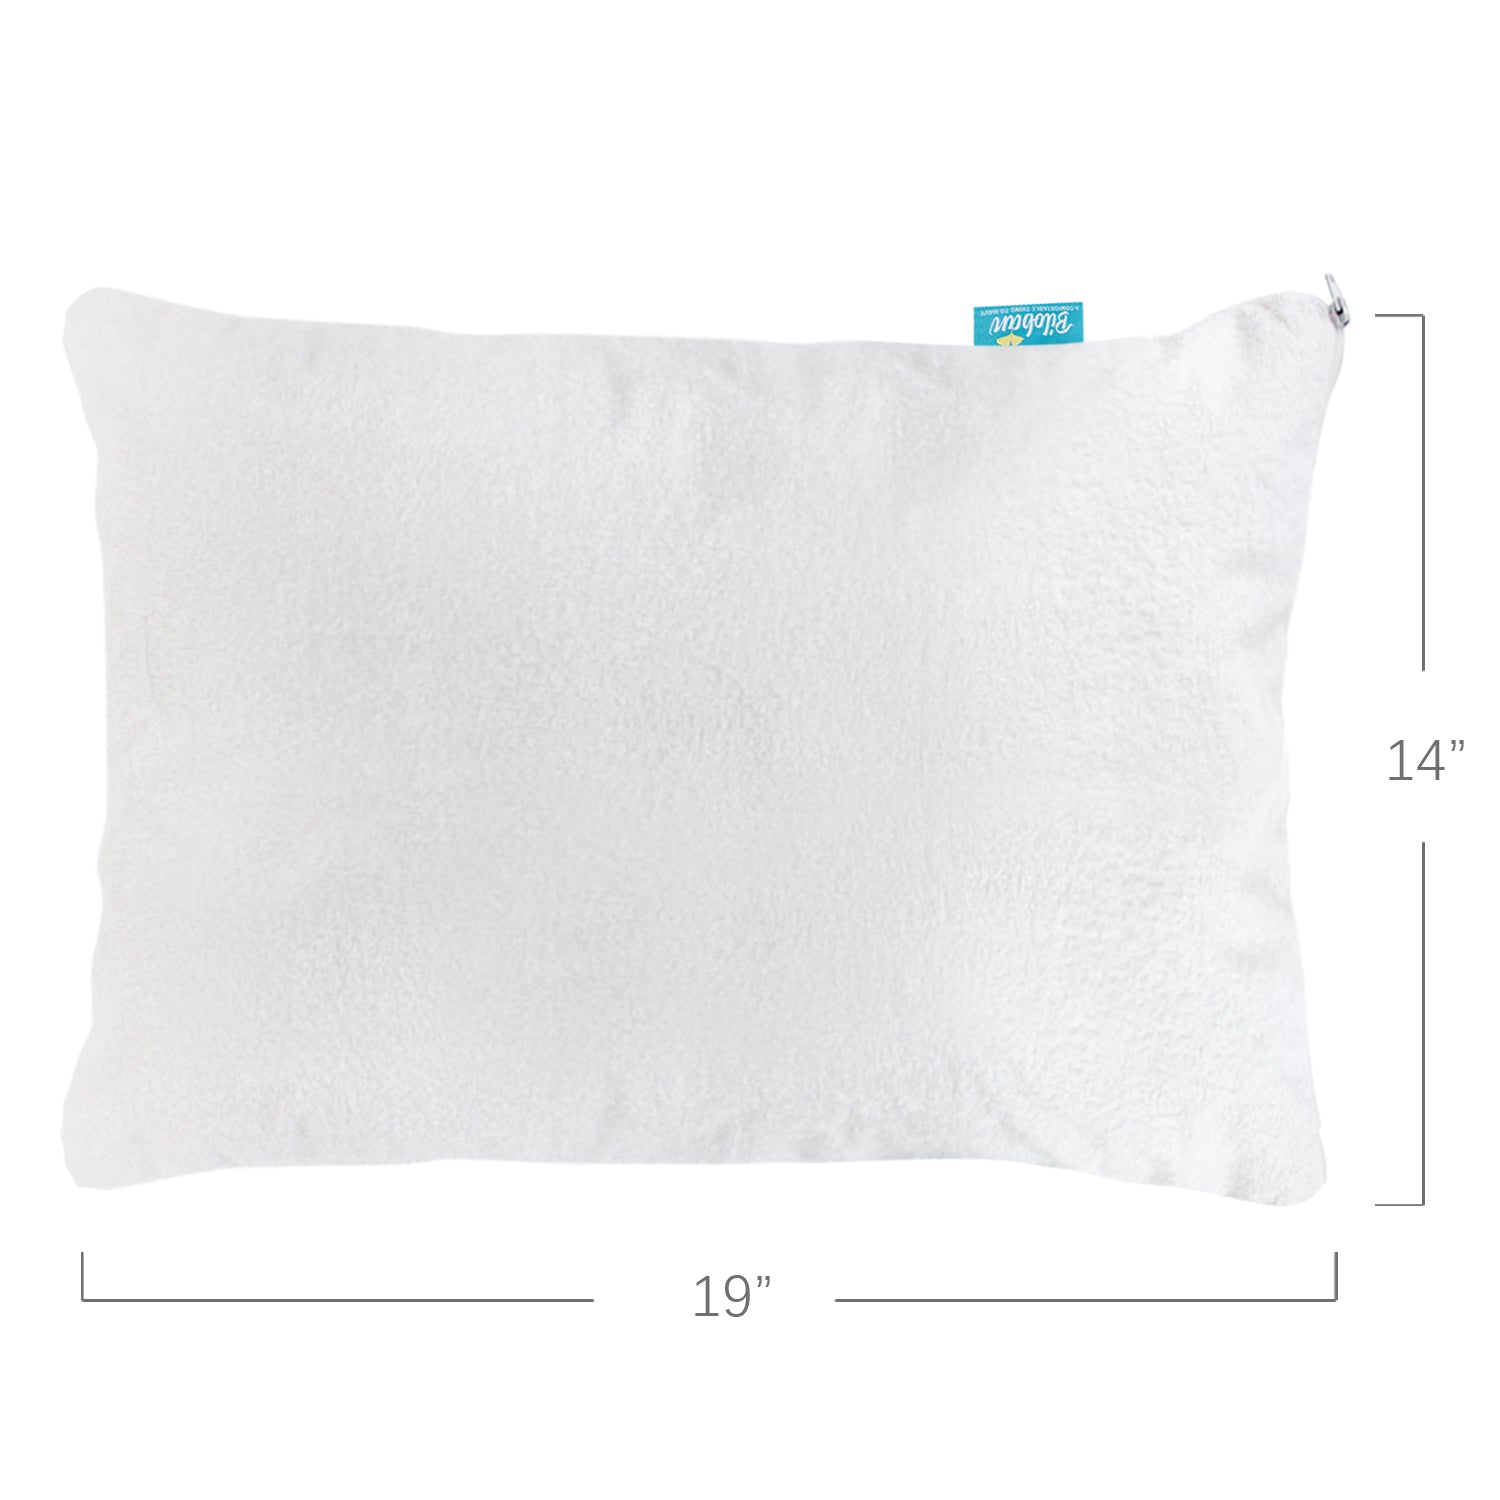 Toddler Pillowcase- 2 Pack, Waterproof, Bamboo Terry Surface, White - Biloban Online Store